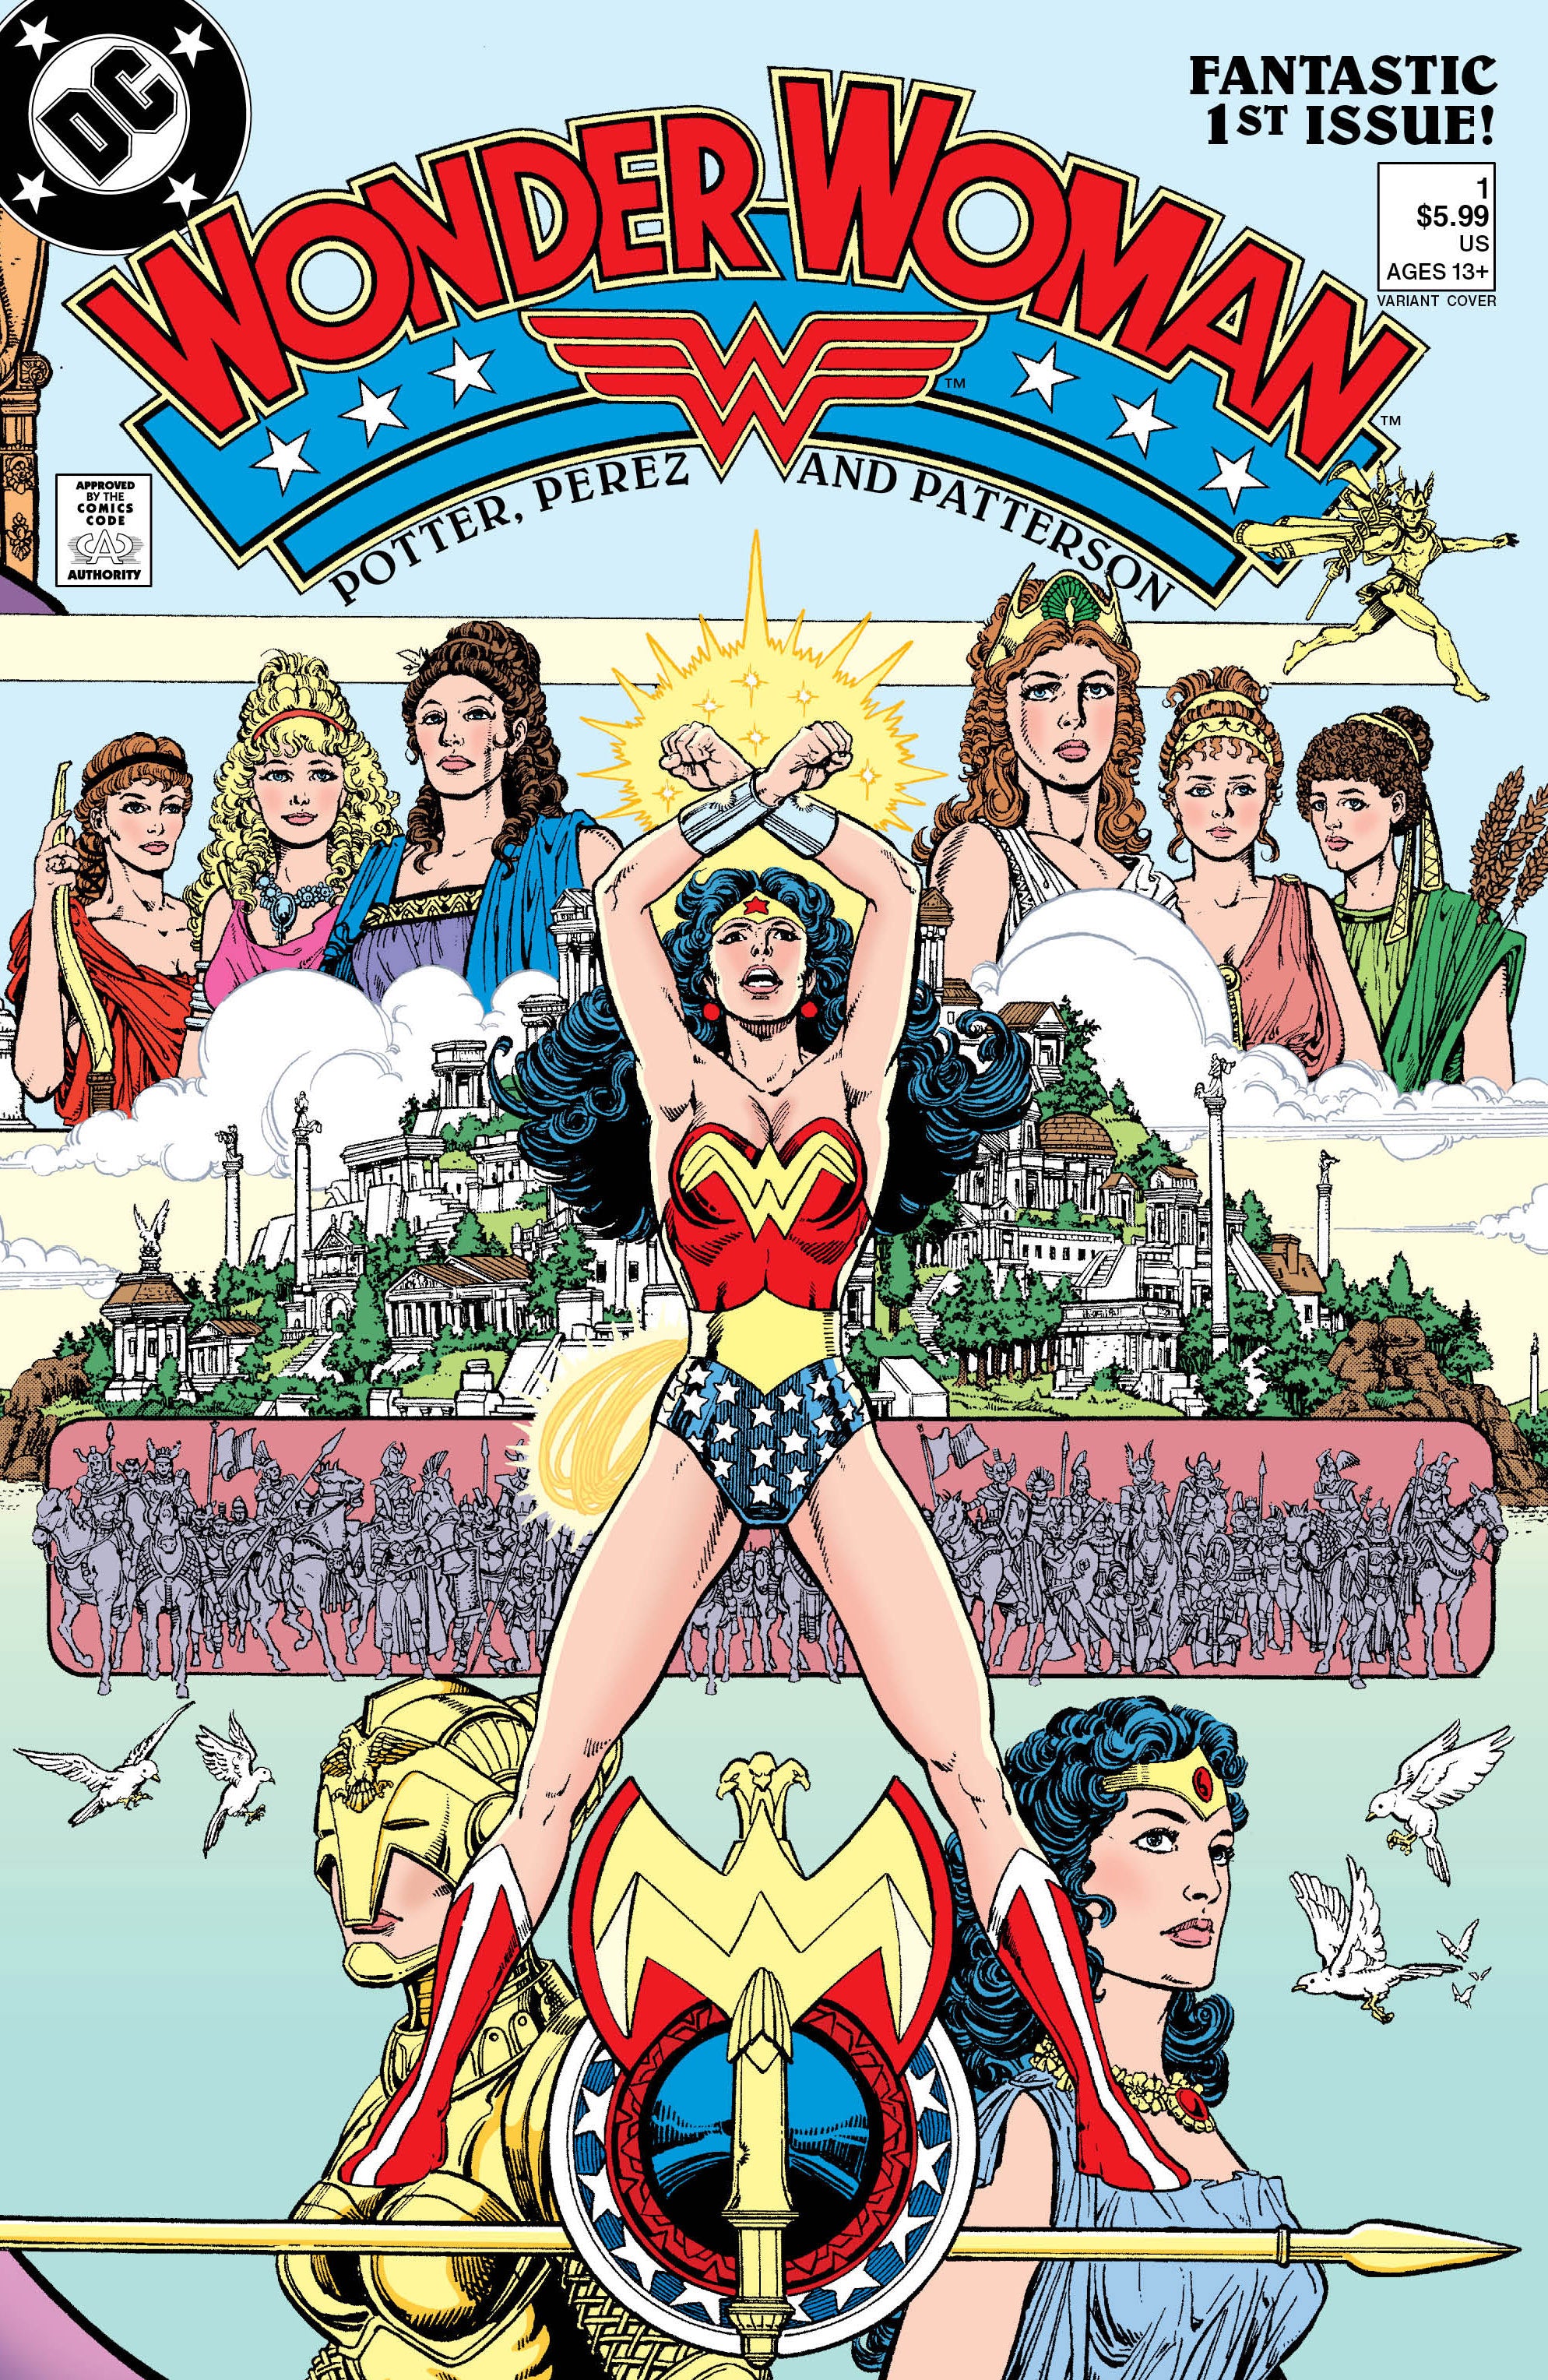 Wonder Woman FCBD 2017 Special Edition (2017-) #1 (Wonder Woman